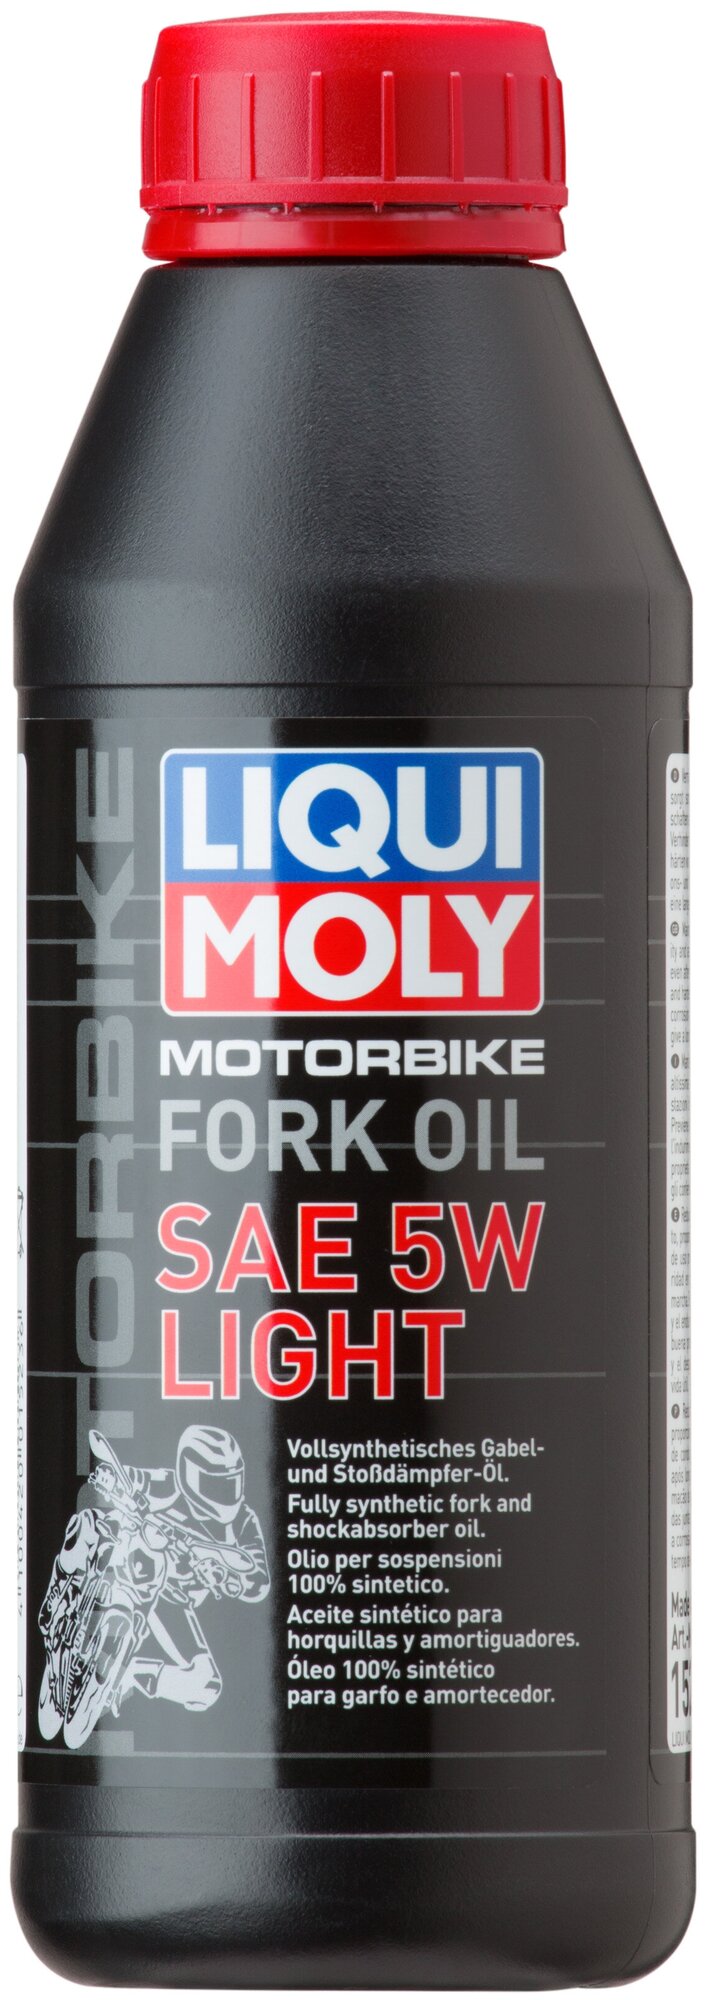 Вилочное масло LIQUI MOLY Motorbike Fork Oil Light 5W